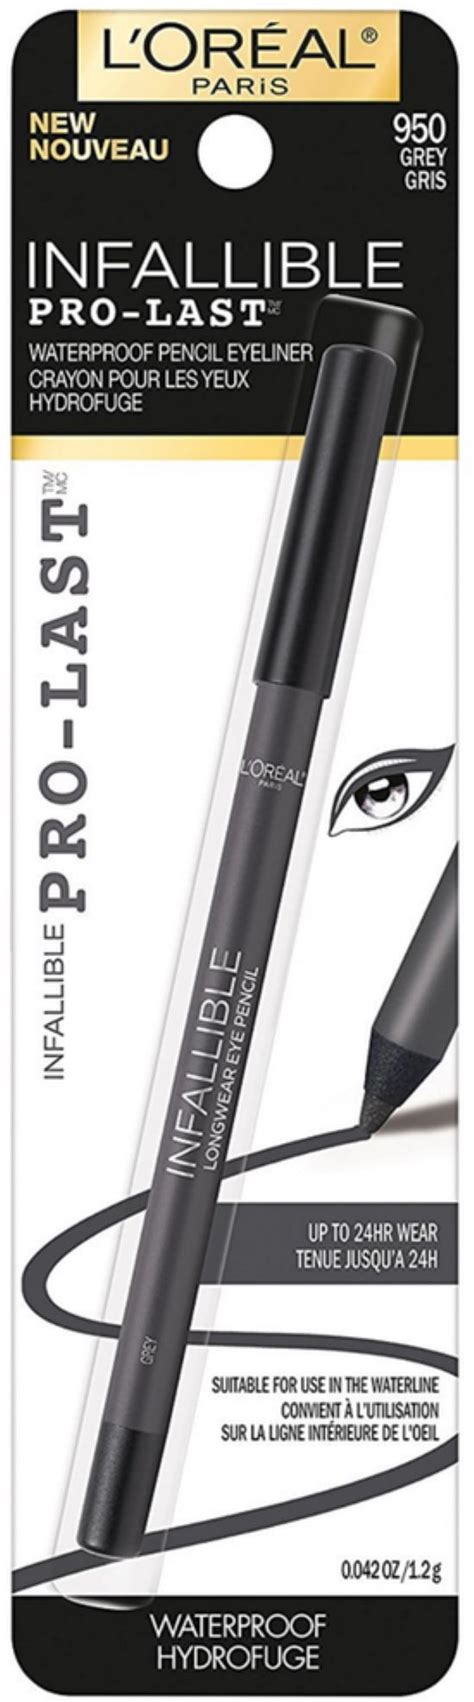 Loreal Paris Infallible Pro Last Waterproof Pencil Eyeliner Grey 1 Ea